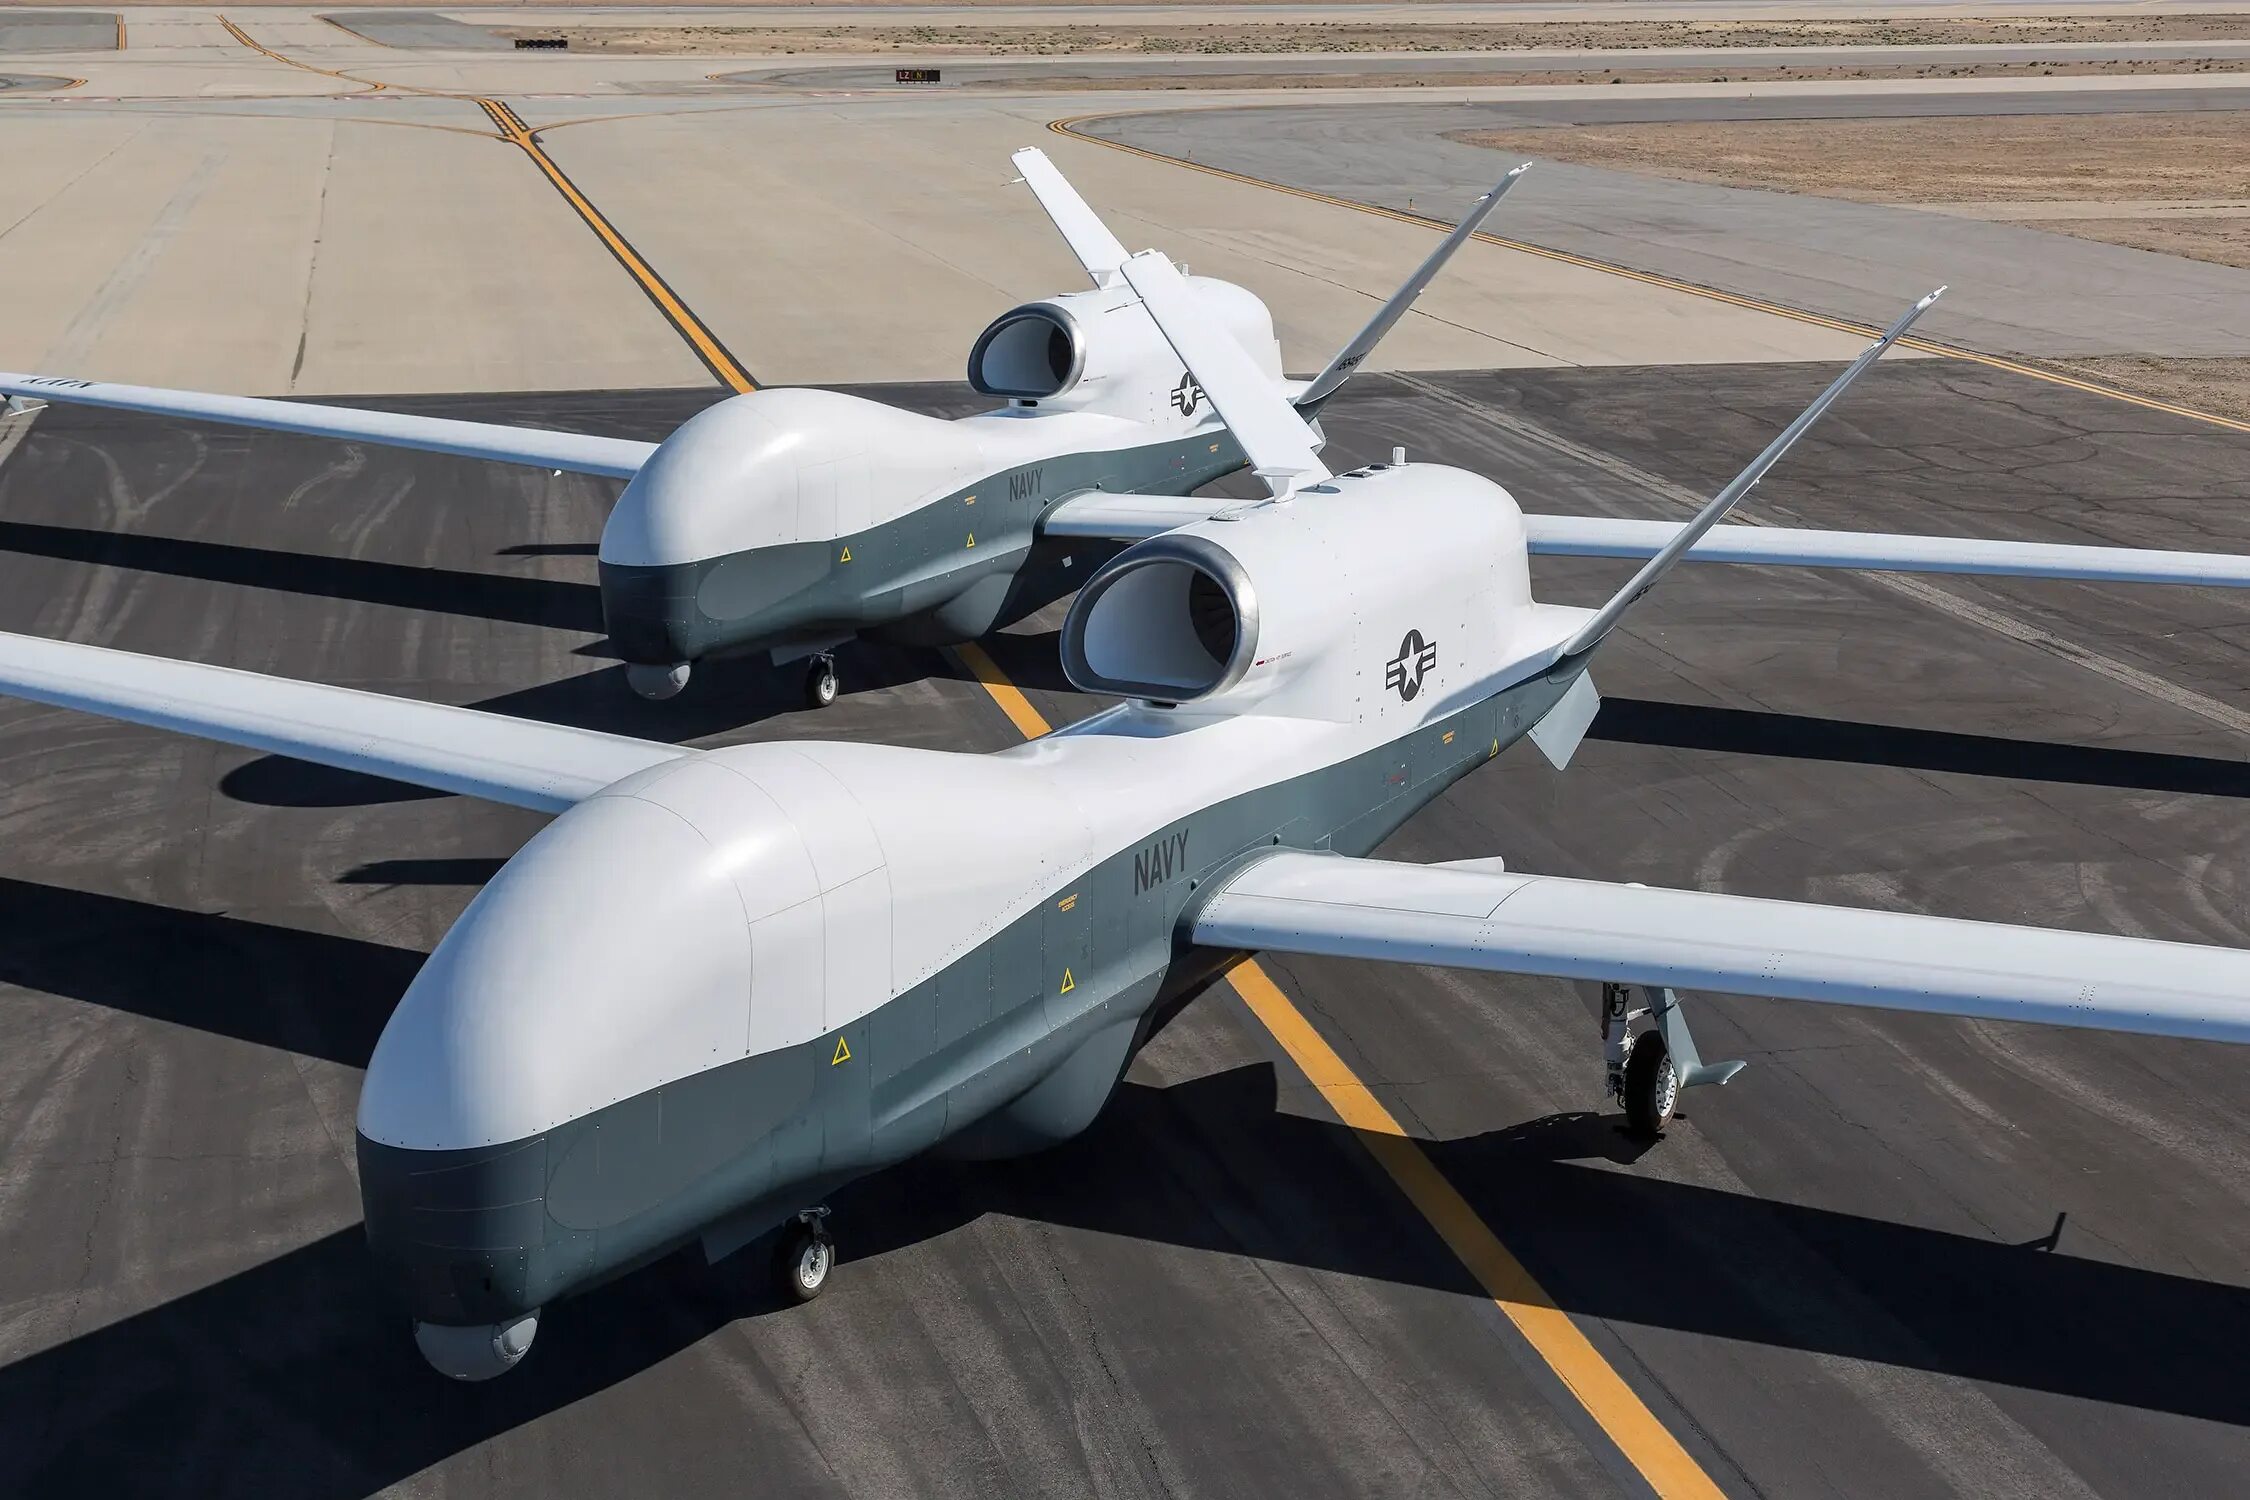 Mq-4c Triton. БПЛА mq-4c Triton. Mq-4c Triton UAV. Northrop Grumman mq-4c Triton.